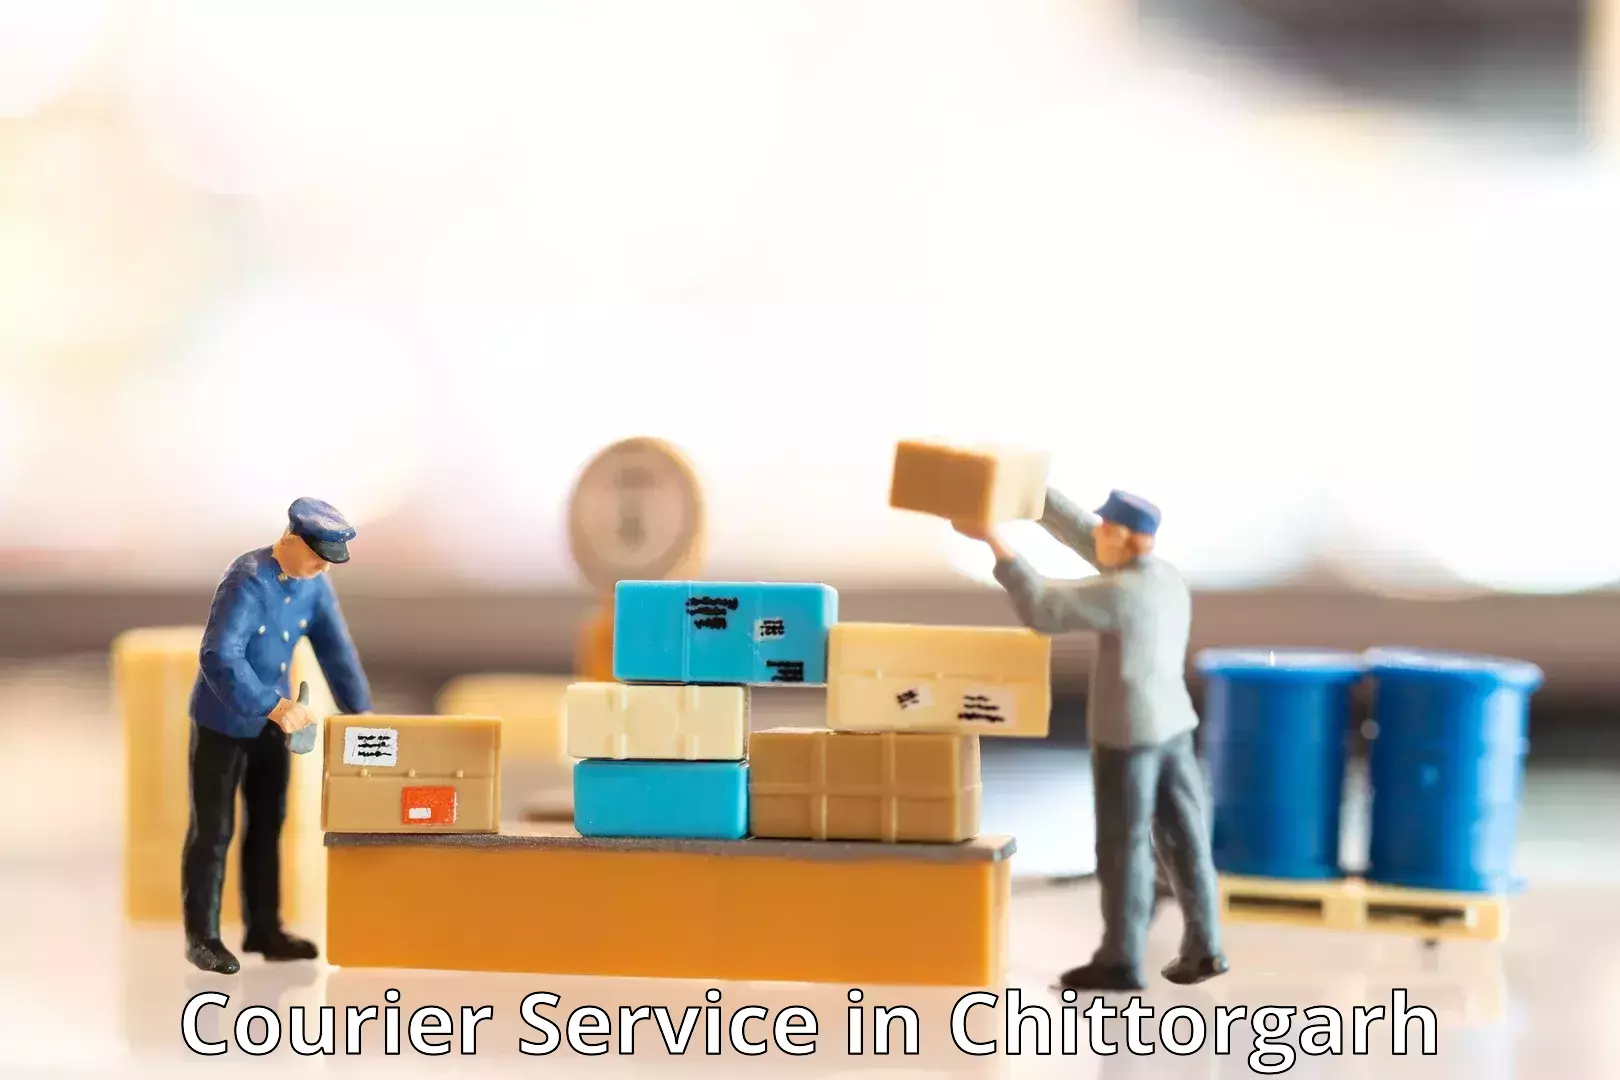 Specialized shipment handling in Chittorgarh